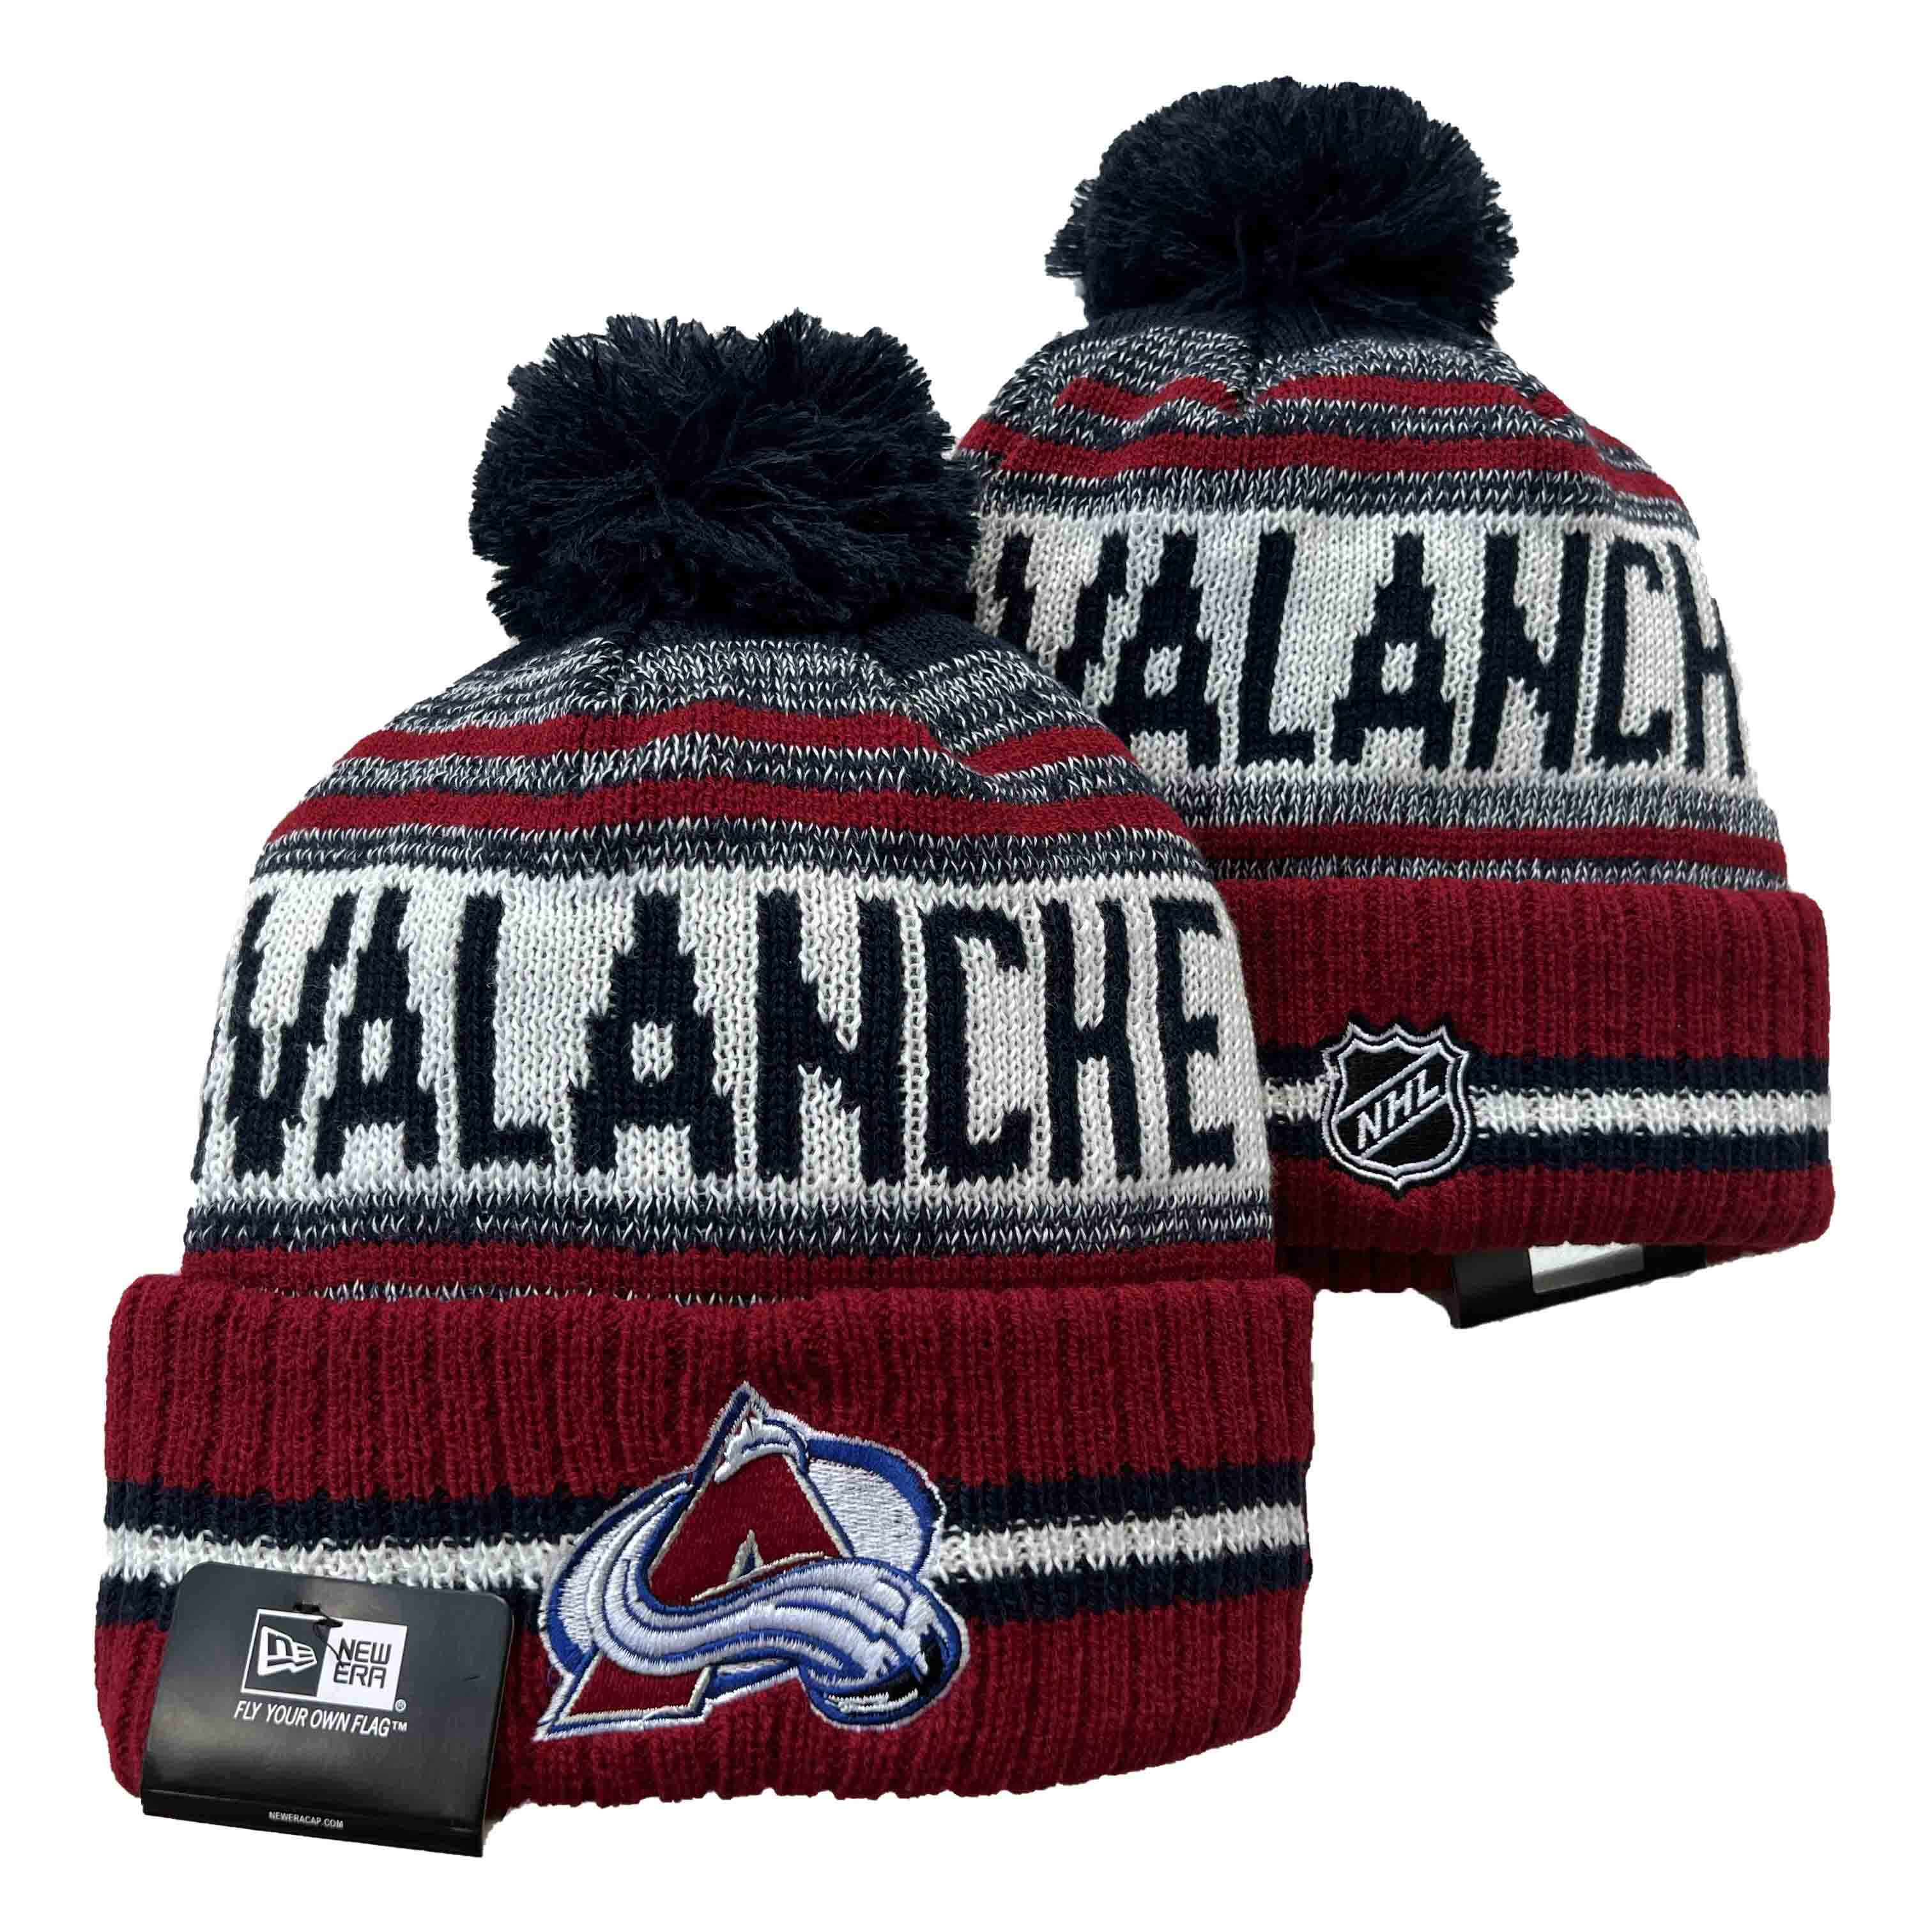 Colorado Avalanche knit hat YD